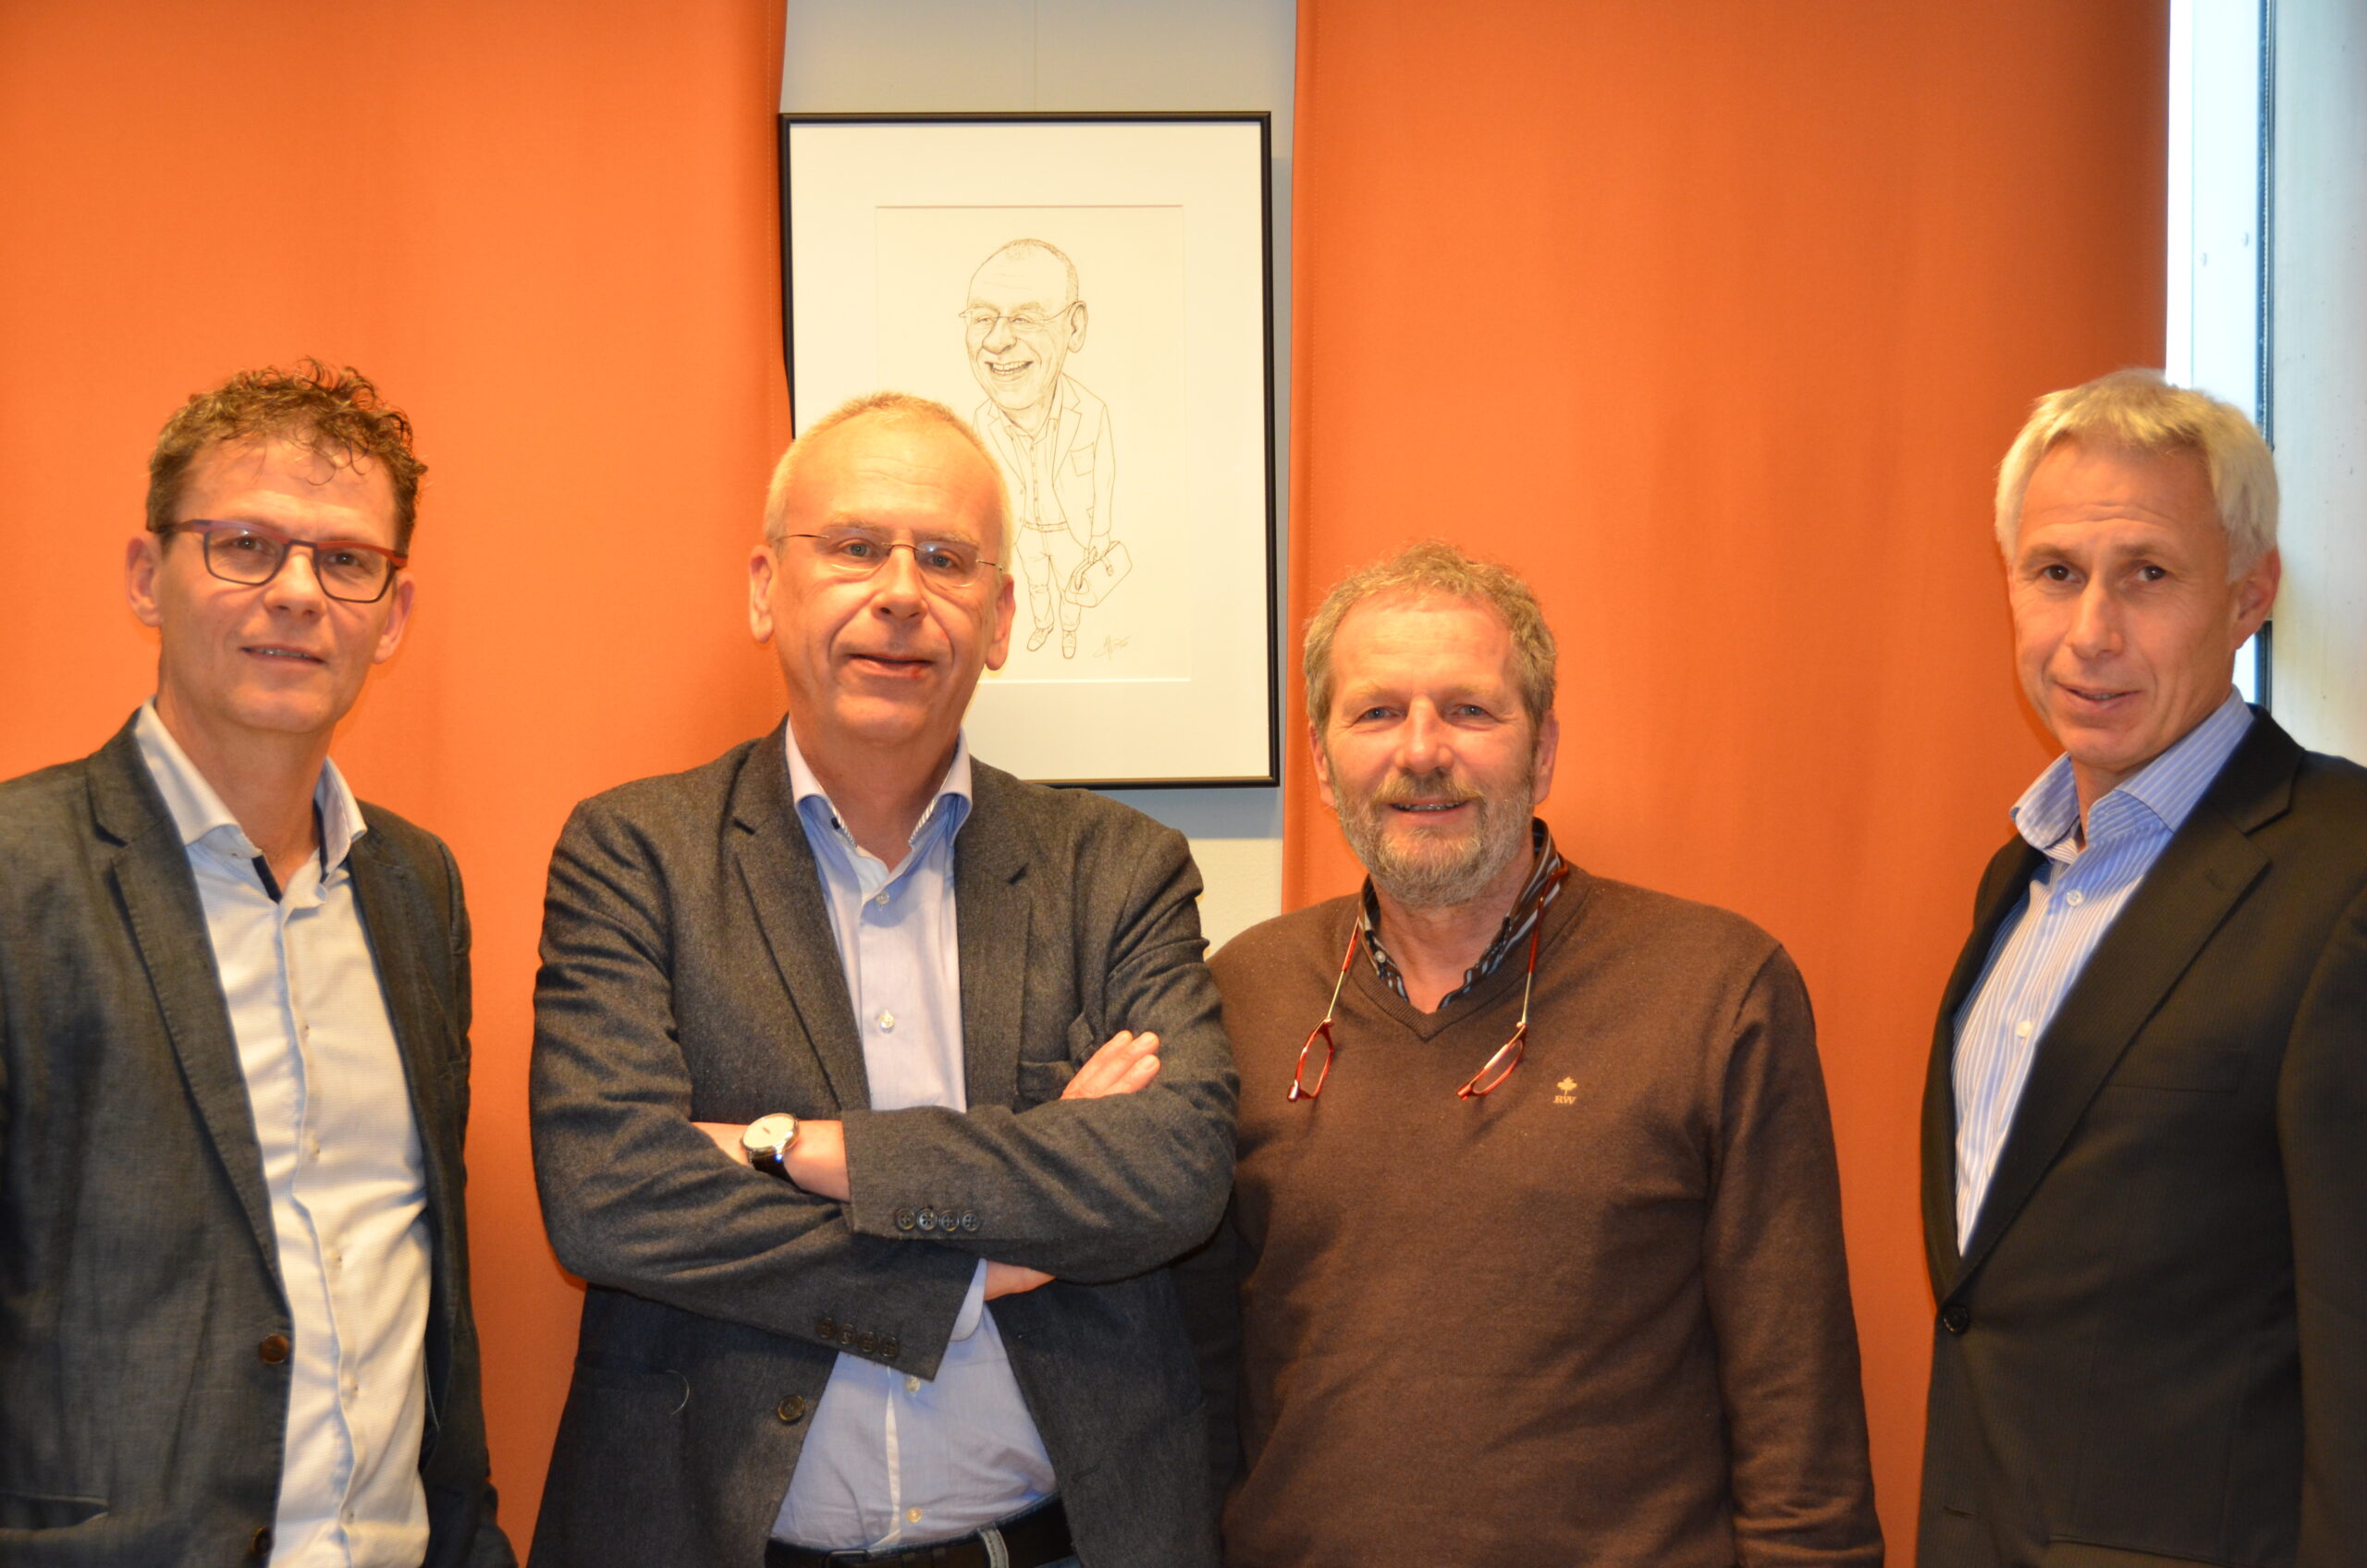 v.l.n.r. dr. Roland van Peppen, prof. dr. Wilco Achterberg, dr. Romke van Balen, drs. Arnold Jongenburger